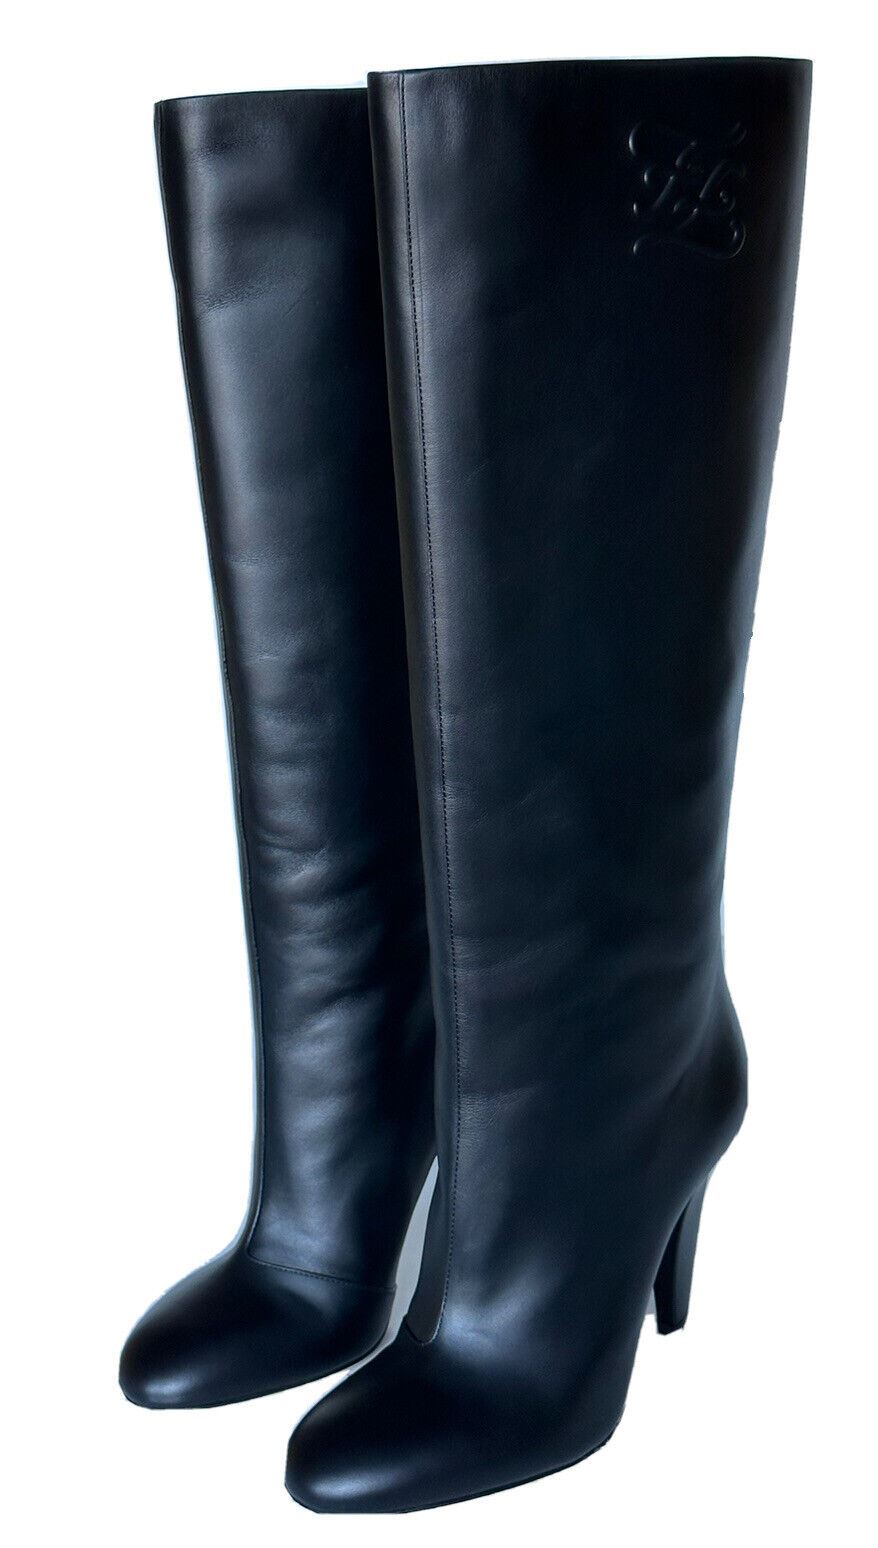 NIB $1550 Fendi Karligraphy Leather Knee Height Black Boots 8 US (38 Eu) 8W8223